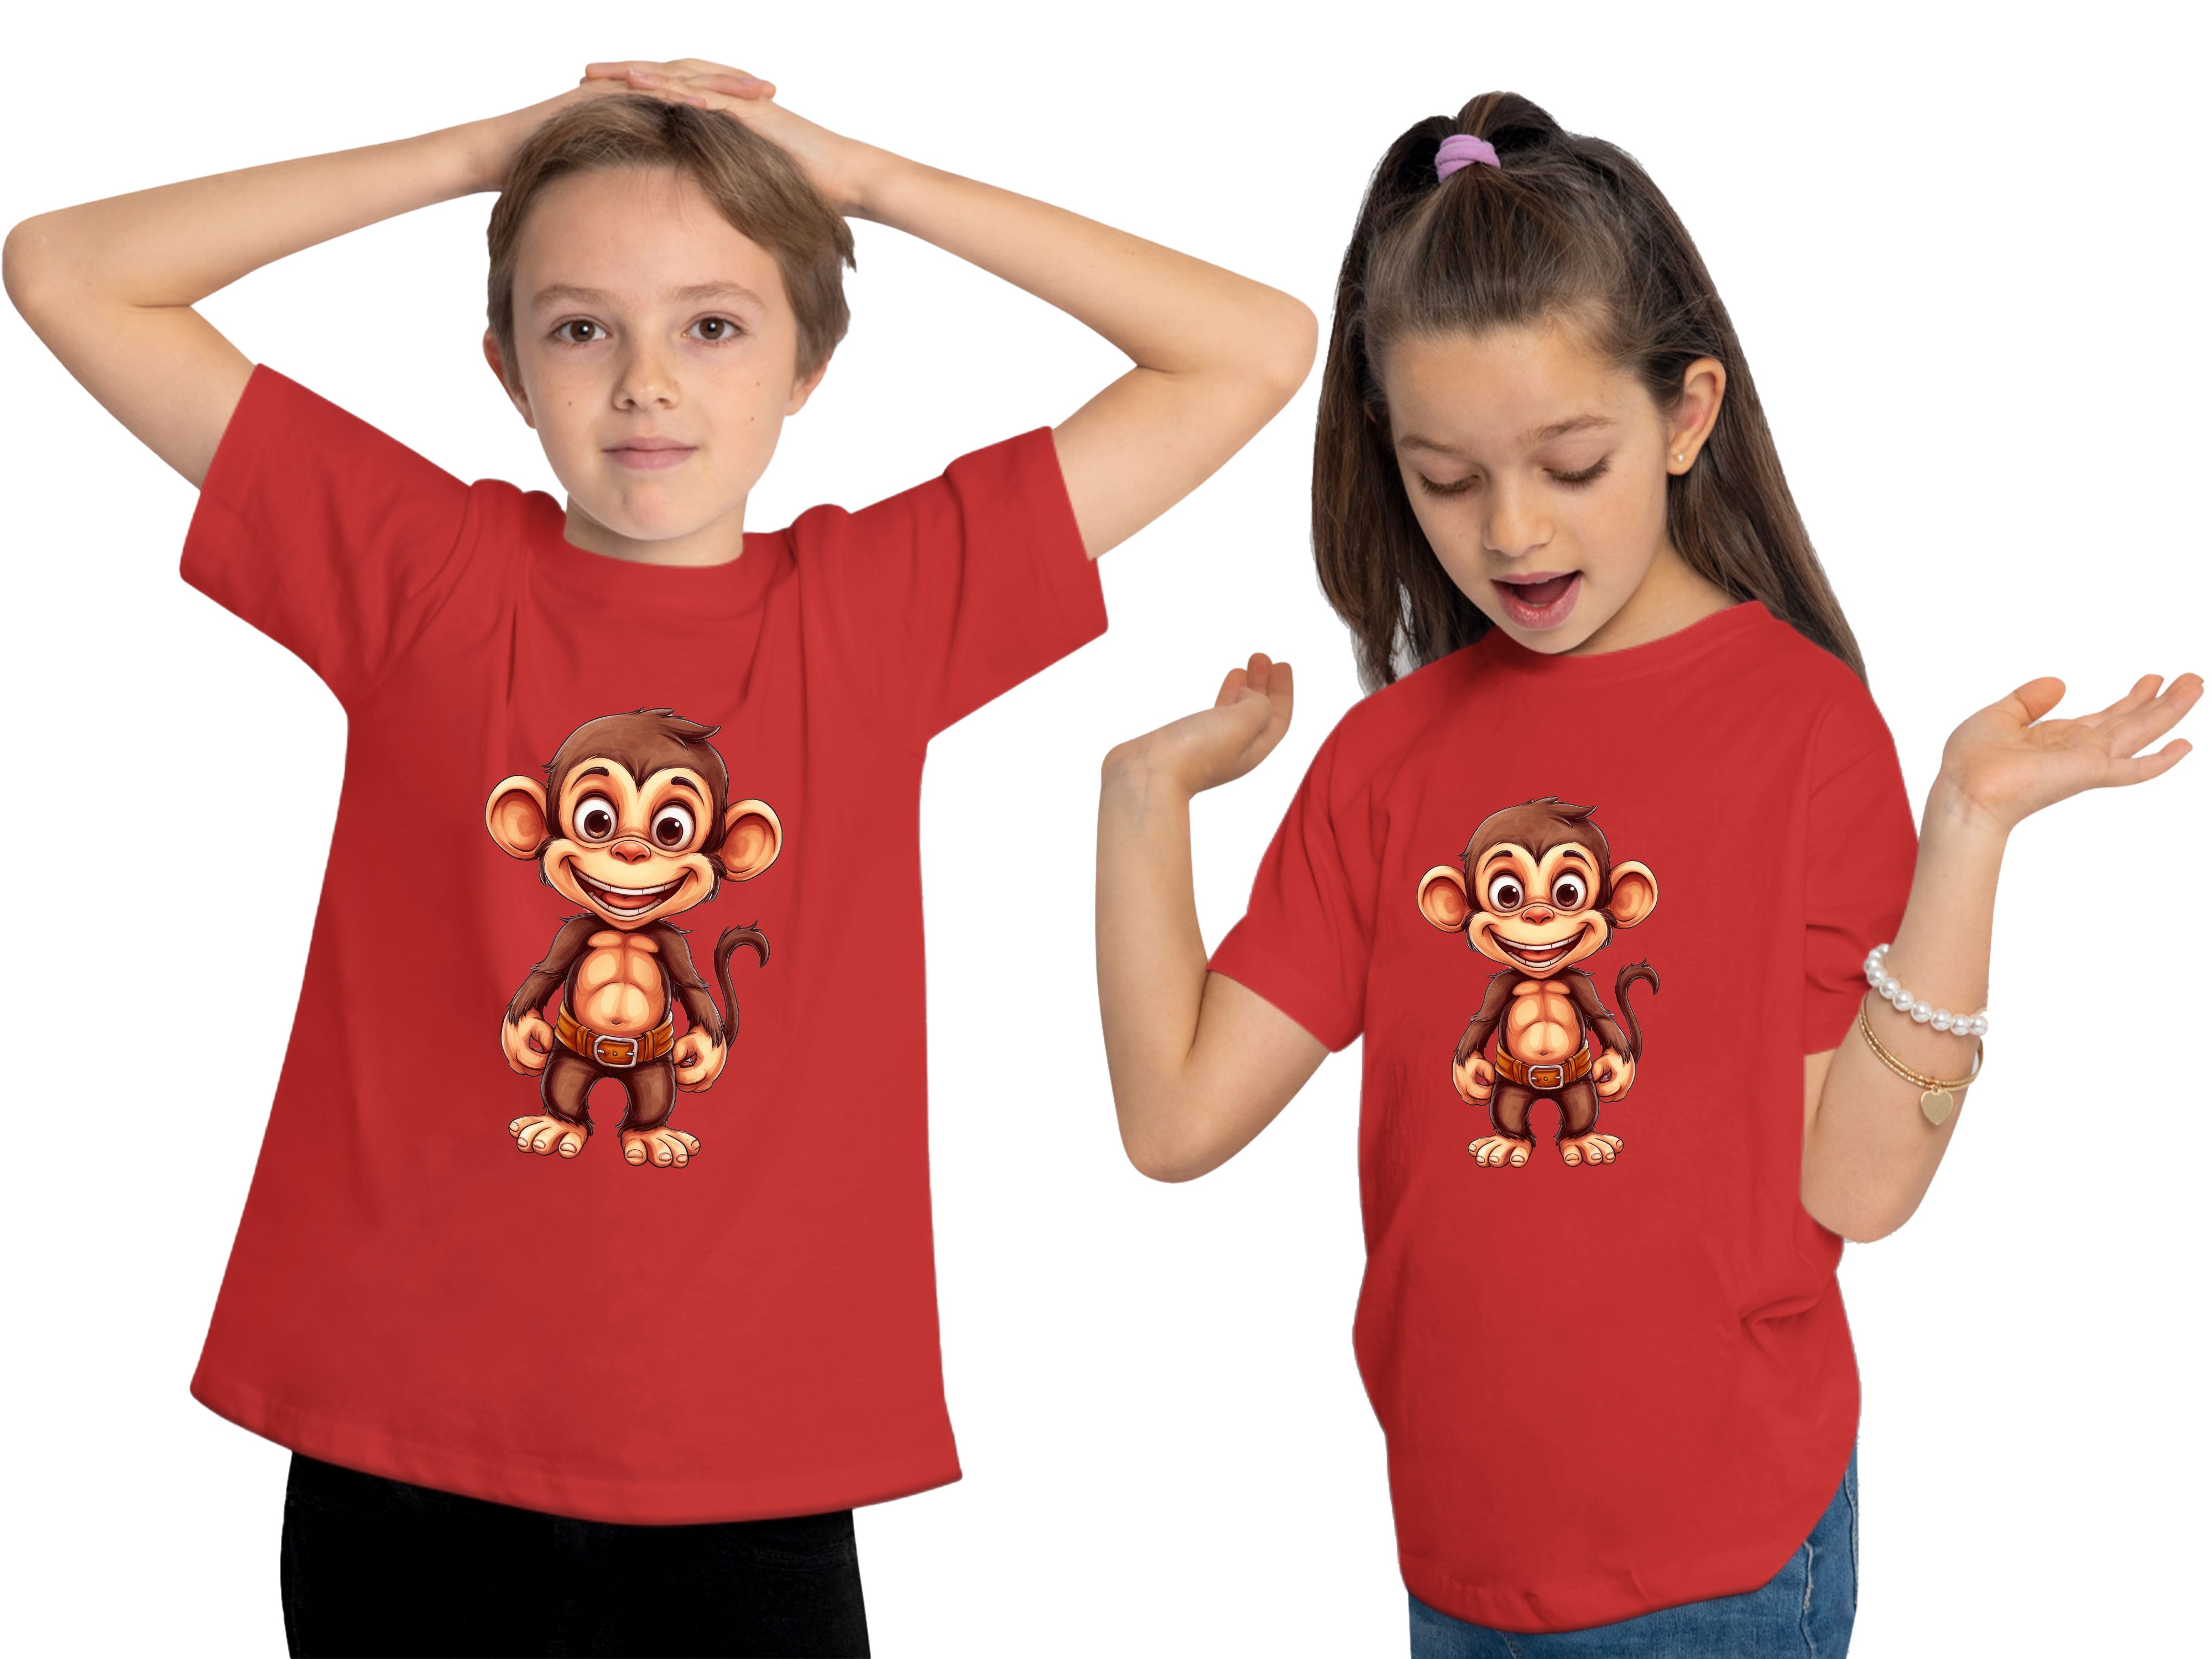 MyDesign24 T-Shirt Kinder Wildtier Print i276 rot bedruckt Baby Baumwollshirt mit Affe Schimpanse Shirt Aufdruck, 